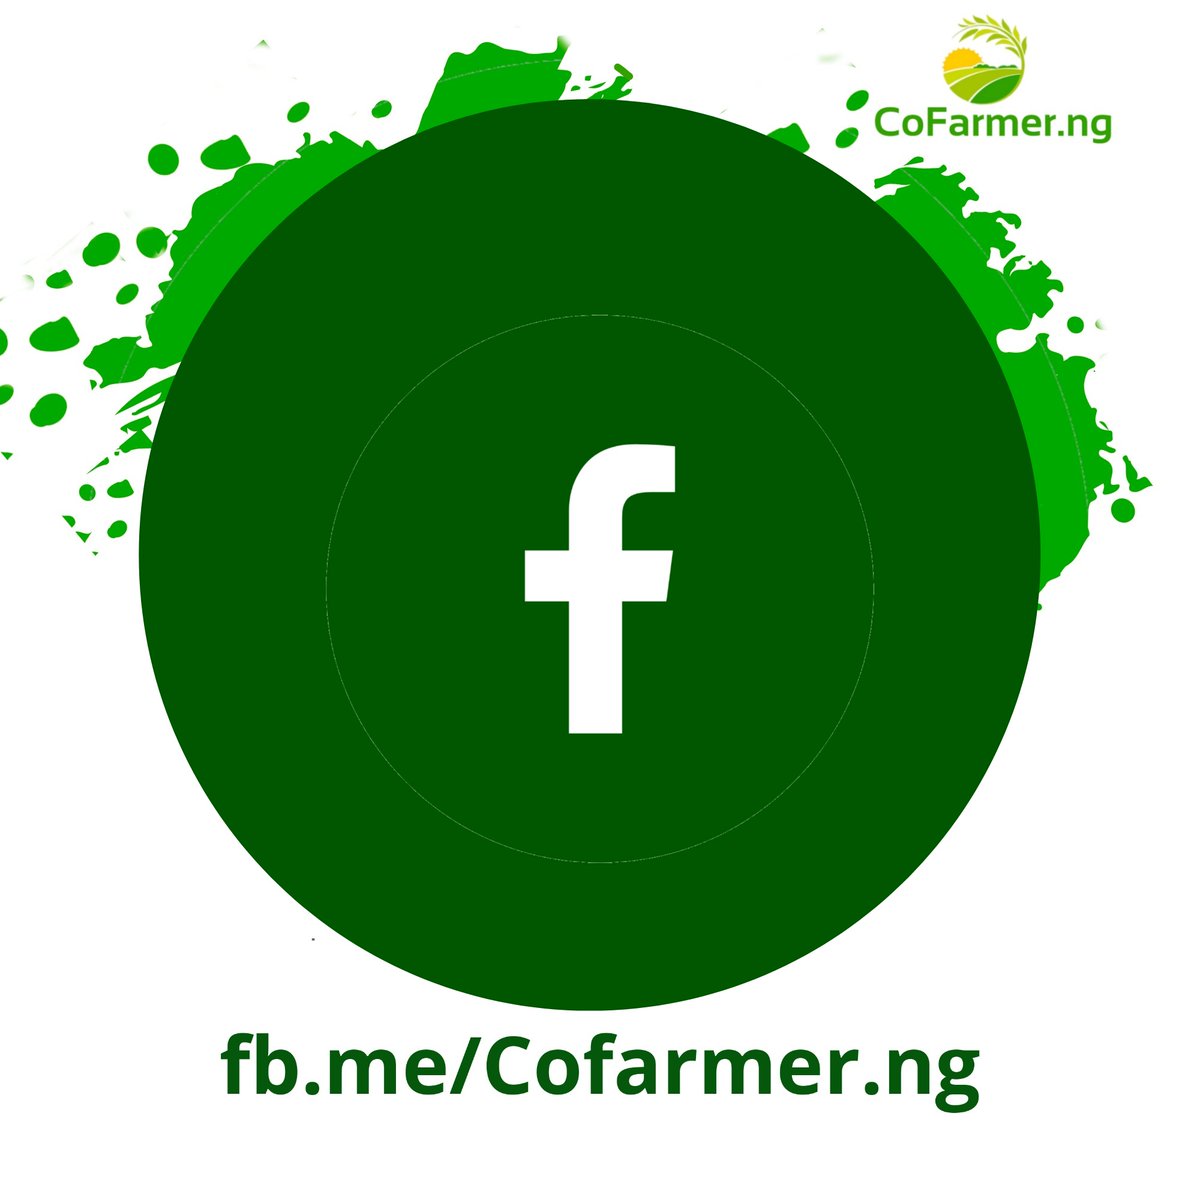 Let's connect More 🍀🍀🍀
Follow us on our social media pages.

#cofarmer #social #socialmedia #twitter #facebook #instagram #investment #investinfarming 
#wizkid